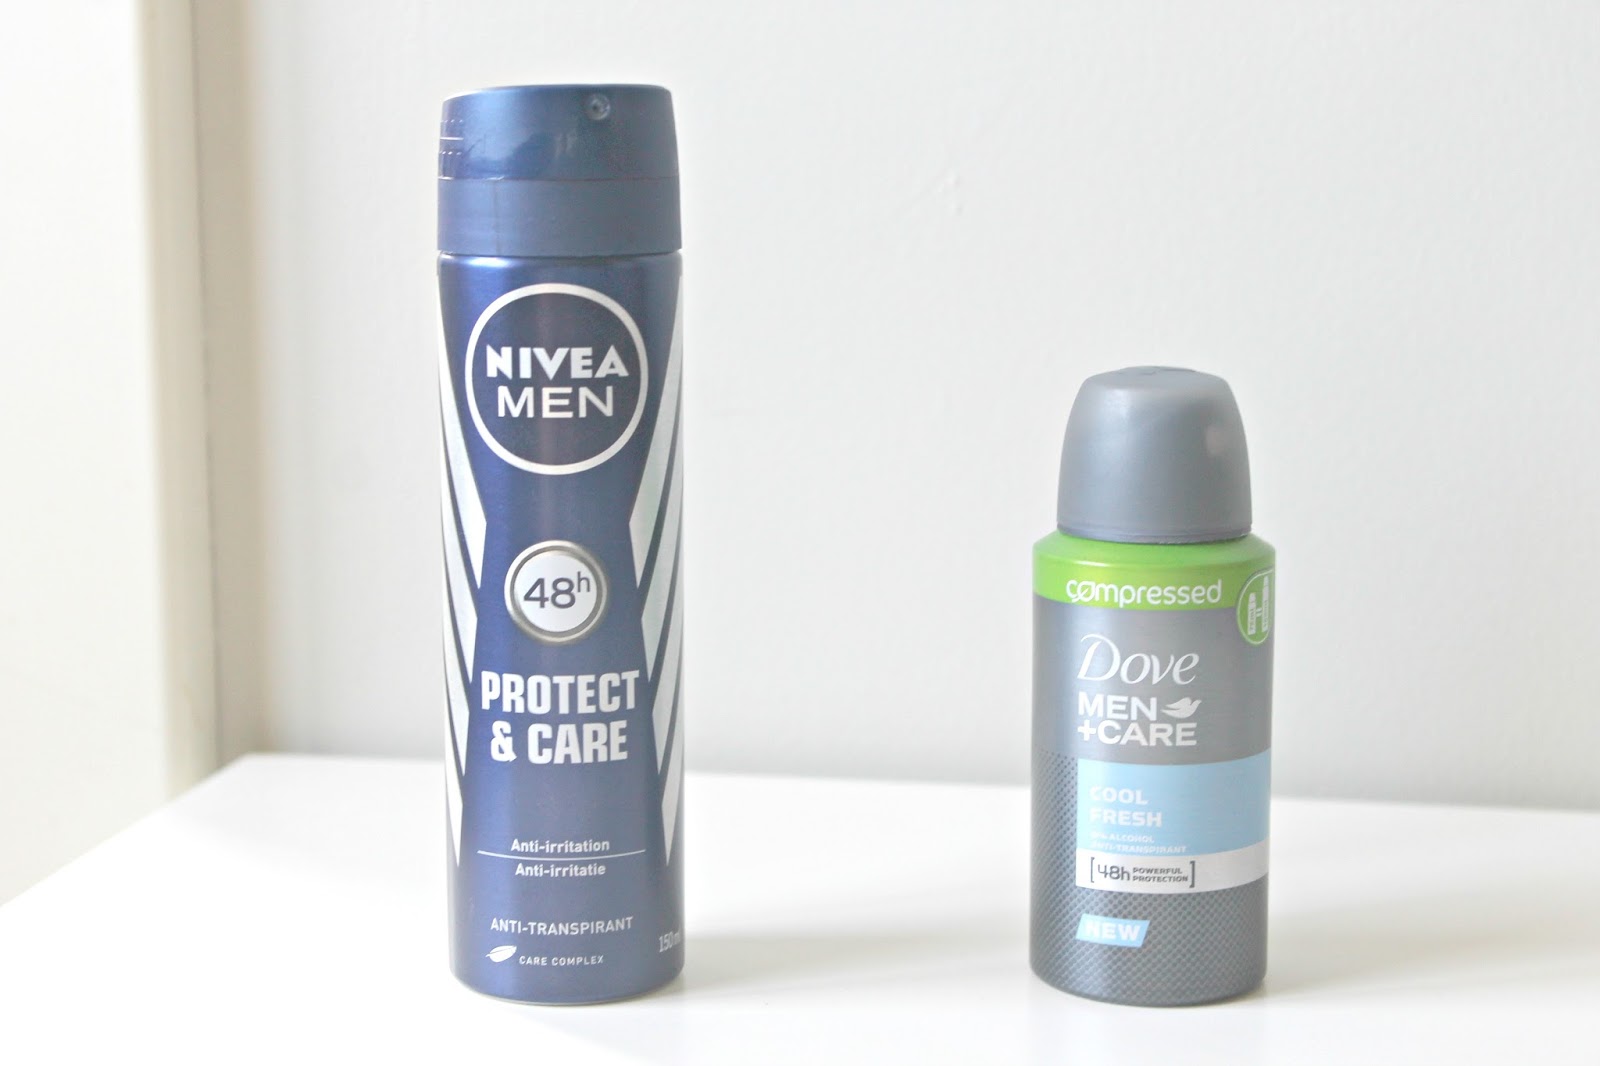 nivea men deodorant protect & care dove men care deodorant cool fresh